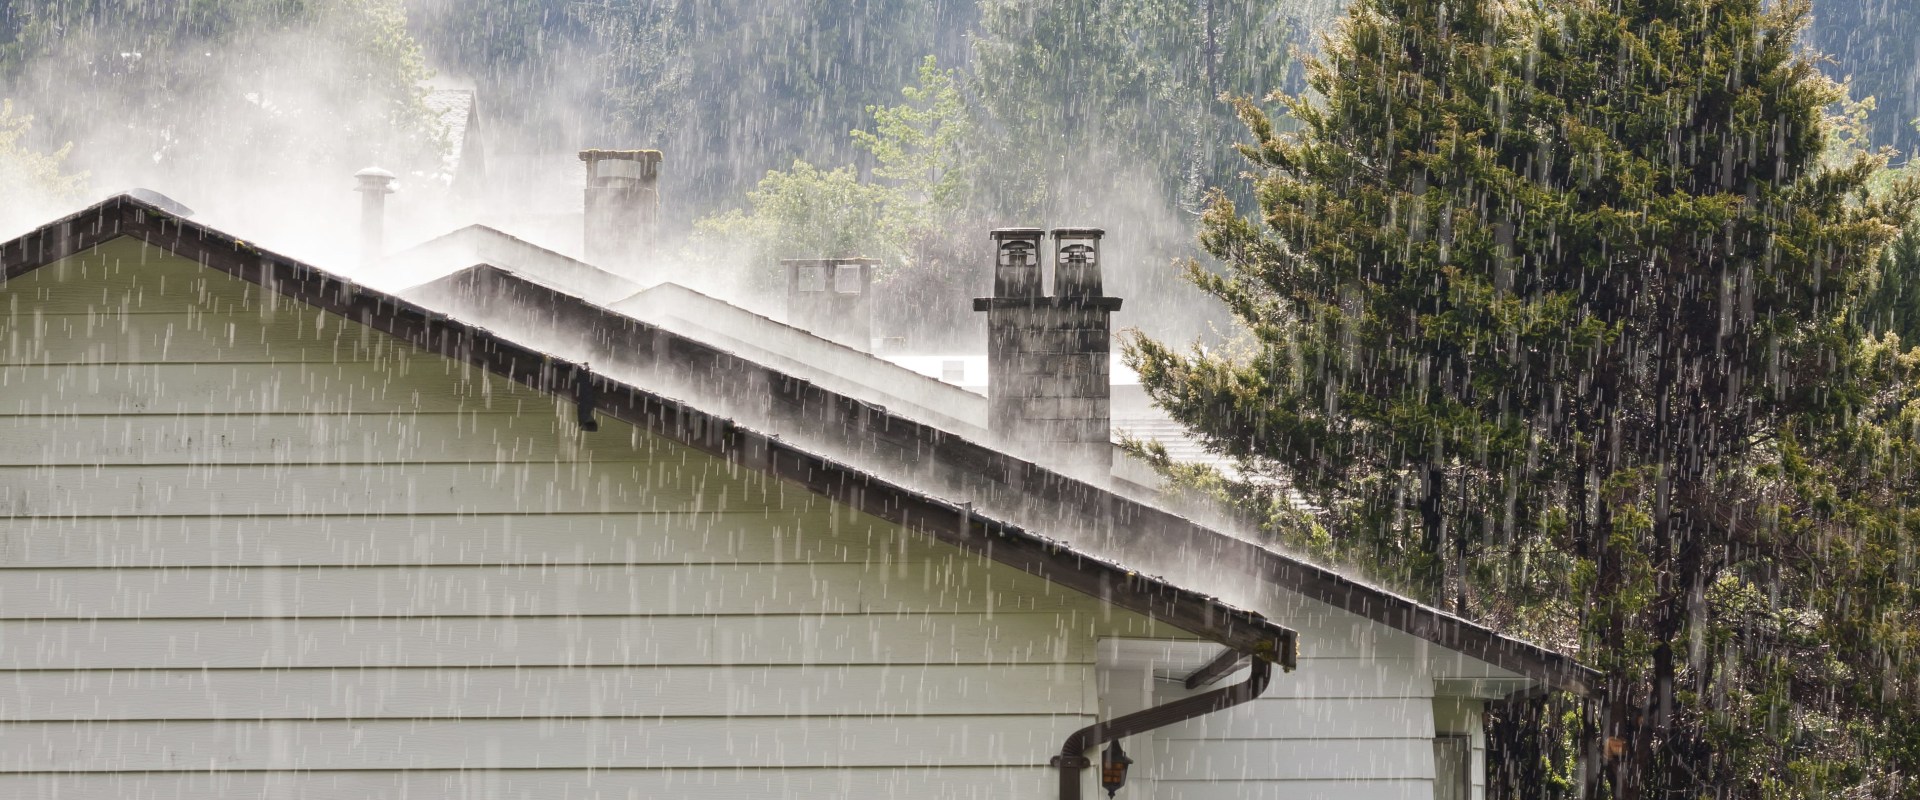 Rain when roofing?